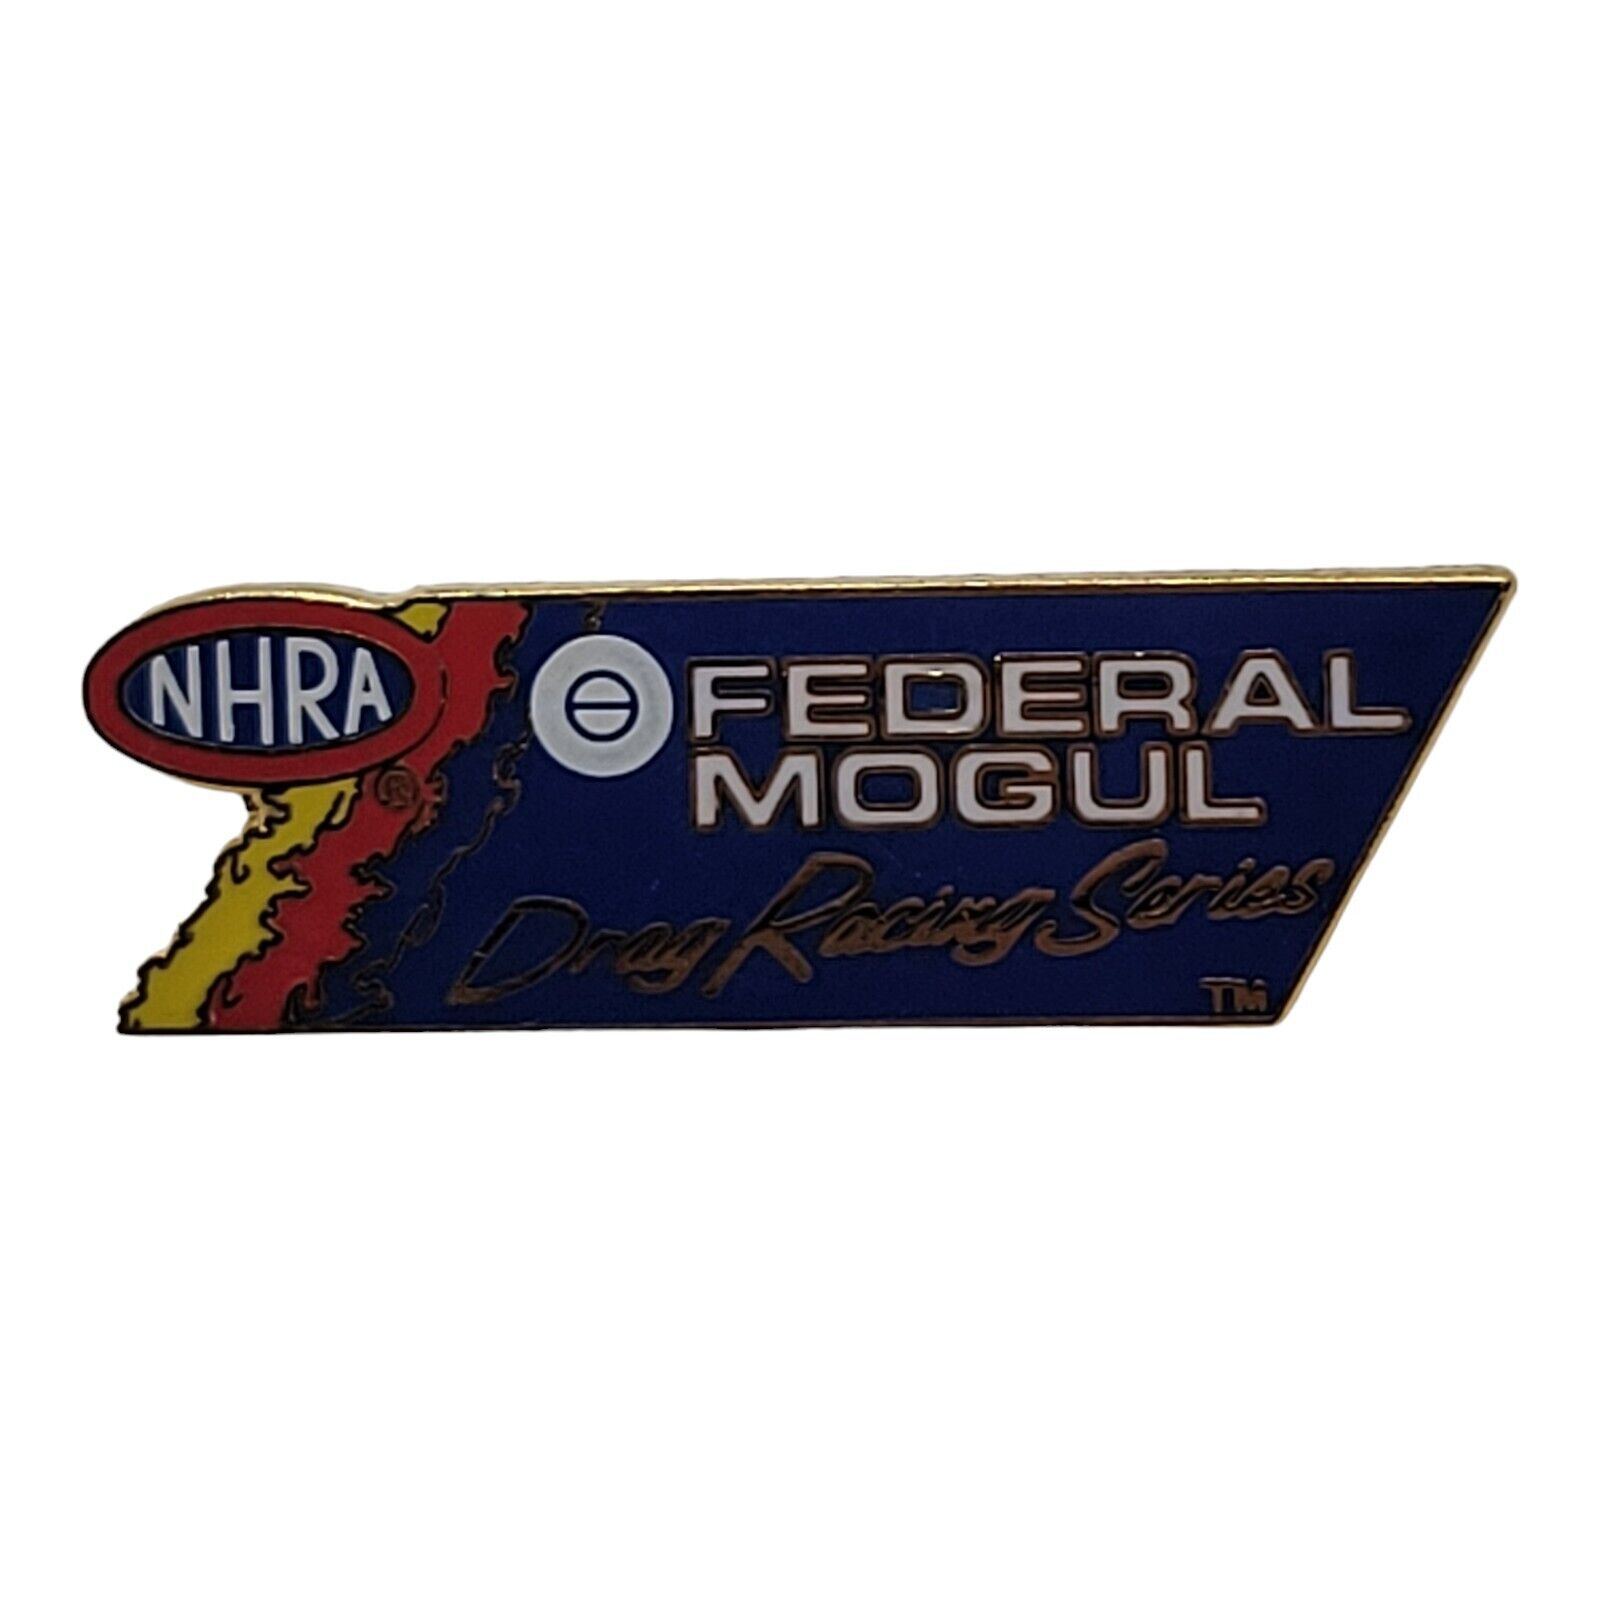 NHRA Federal Mogul Drag Racing Series Pin - National Hot Rod Association